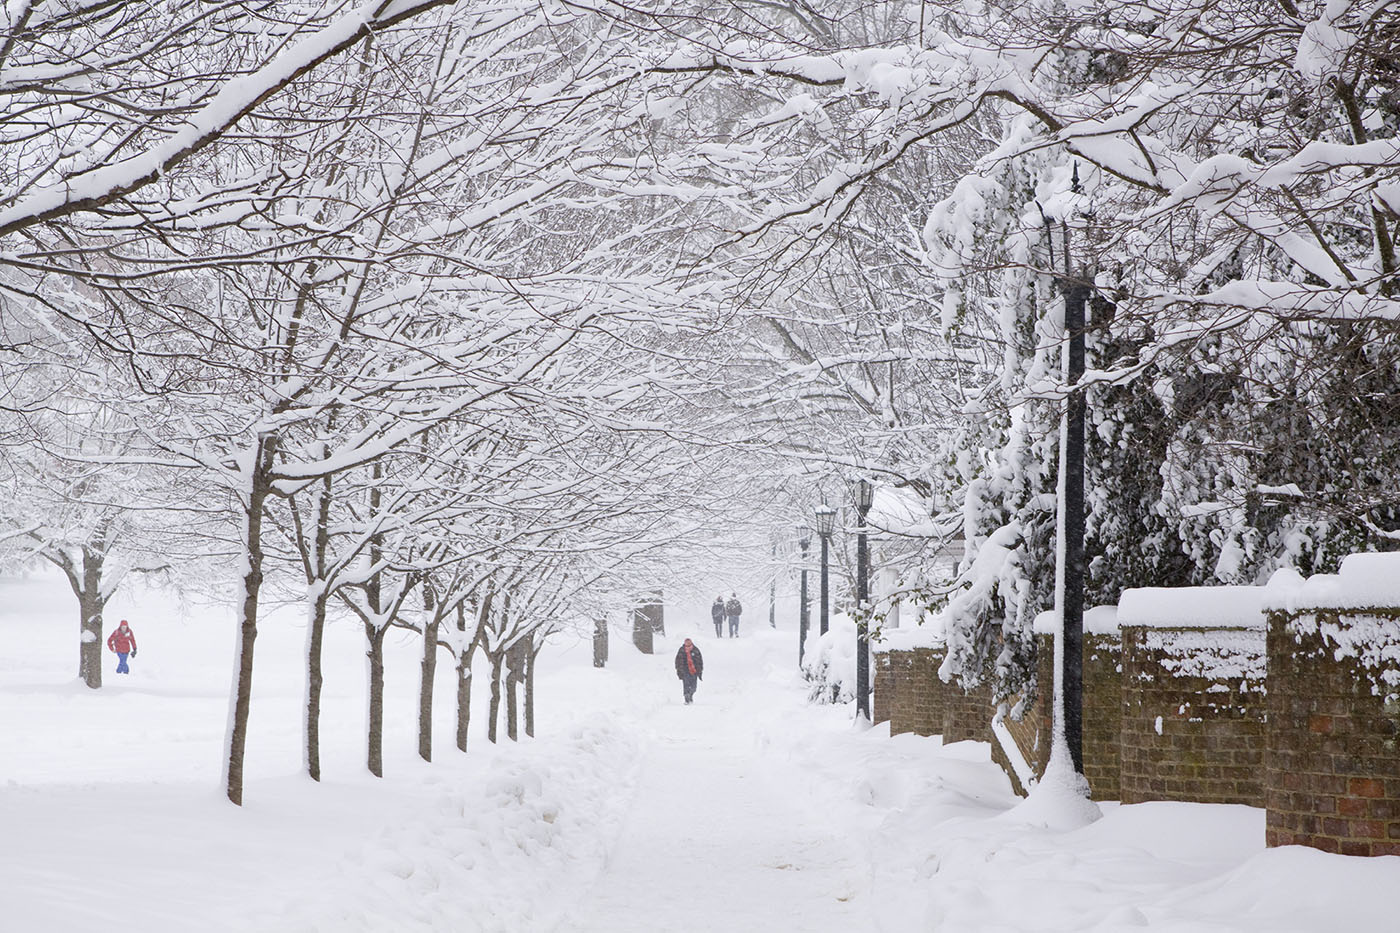 people walking on snow covered sidewalks